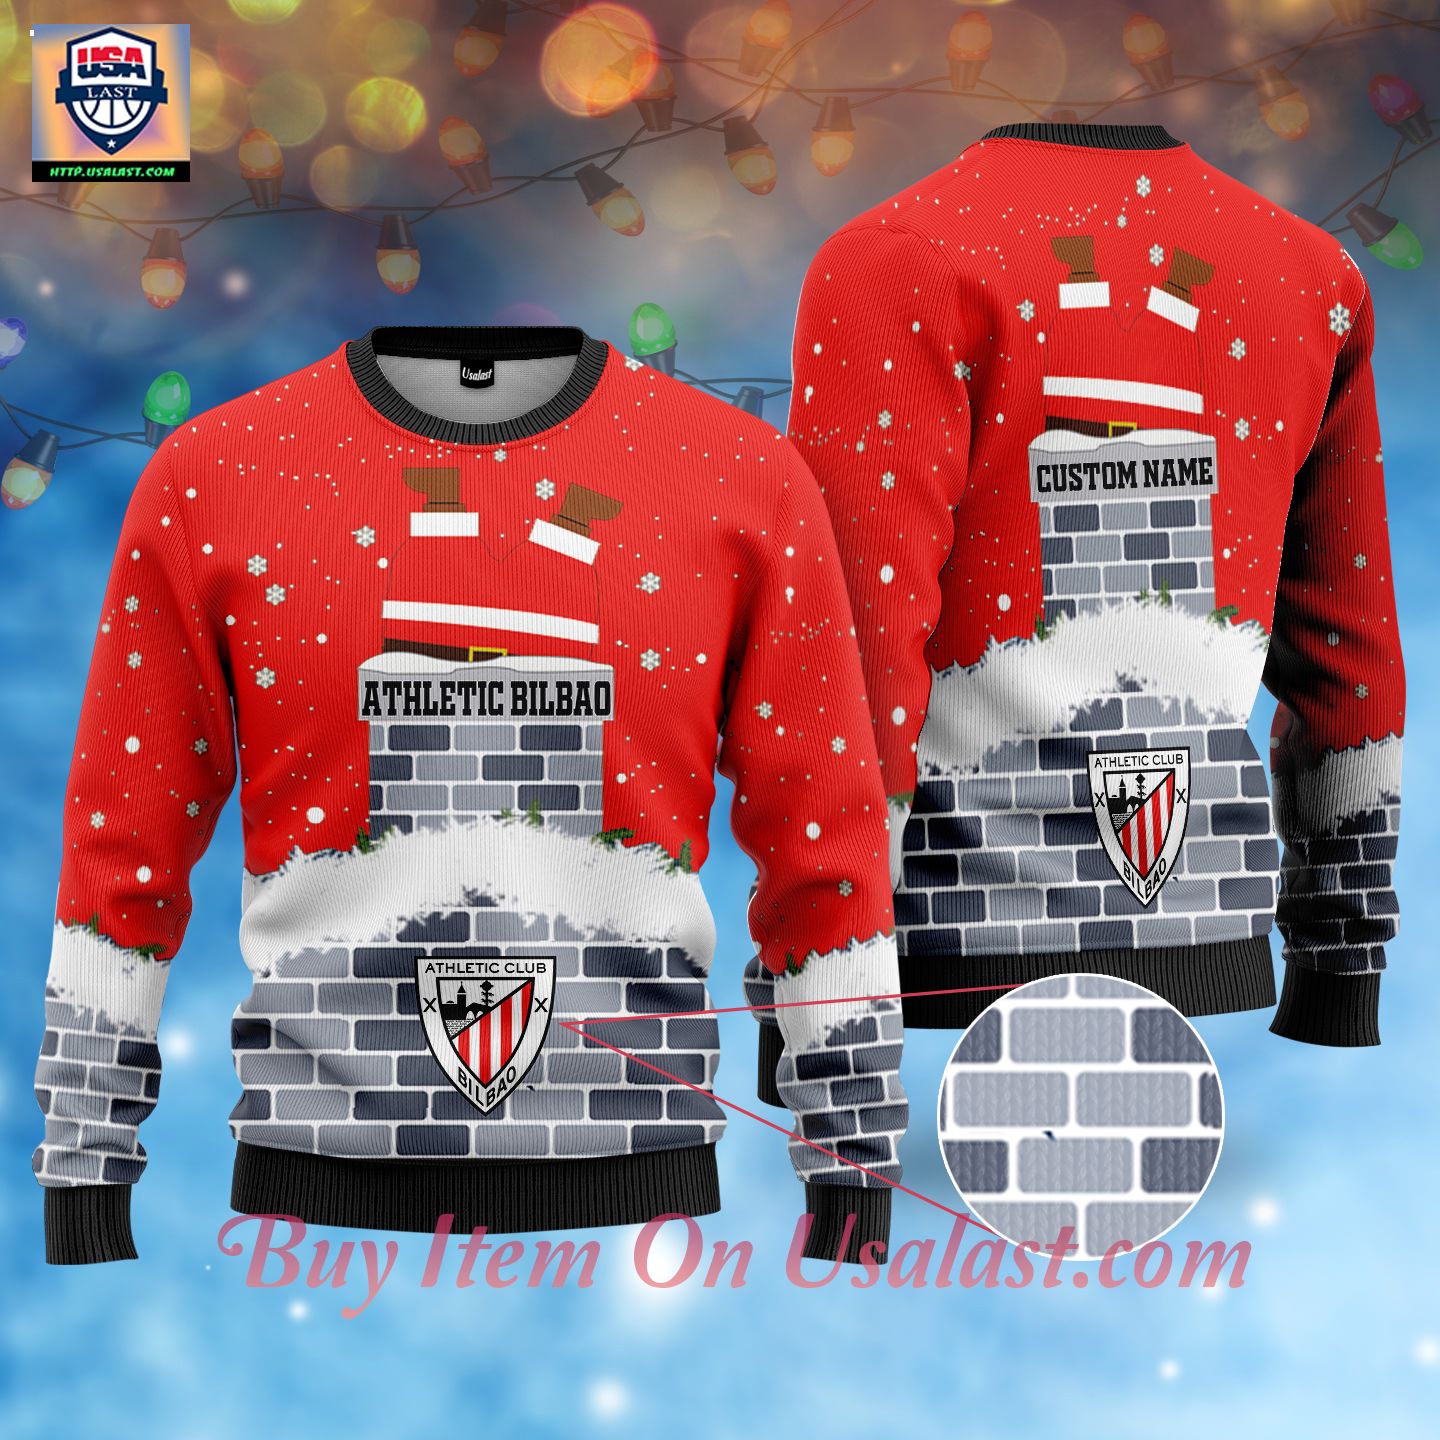 athletic-bilbao-santa-claus-custom-name-ugly-christmas-sweater-1-r2DJJ.jpg